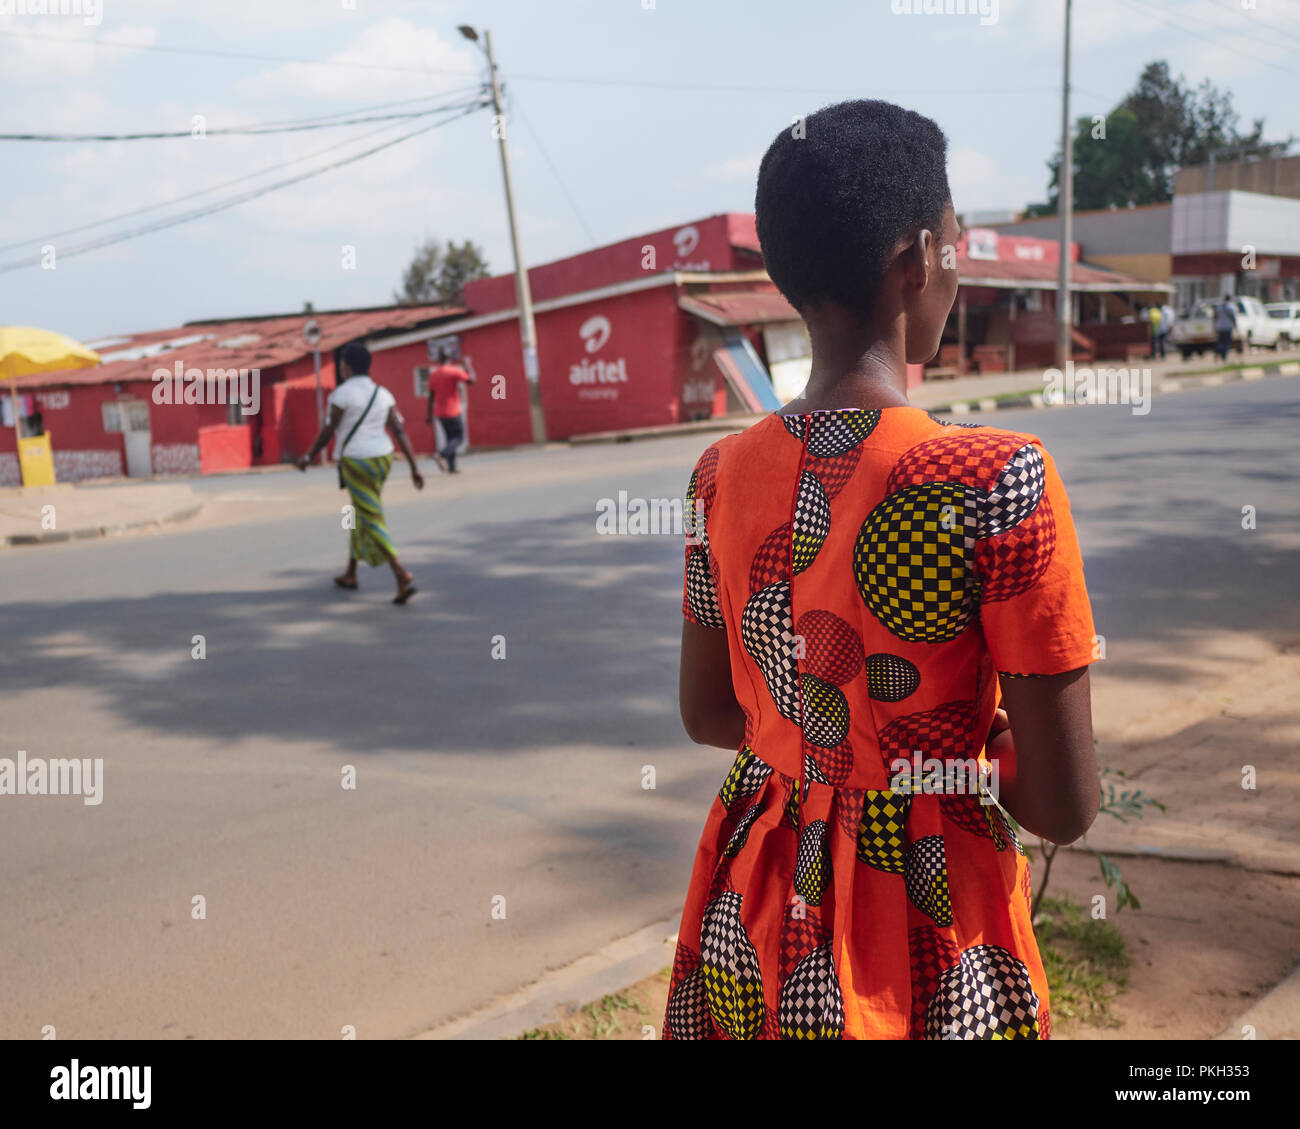 Lady wearing traditional dress in Kigali, Rwanda. Street photography Stock Photo